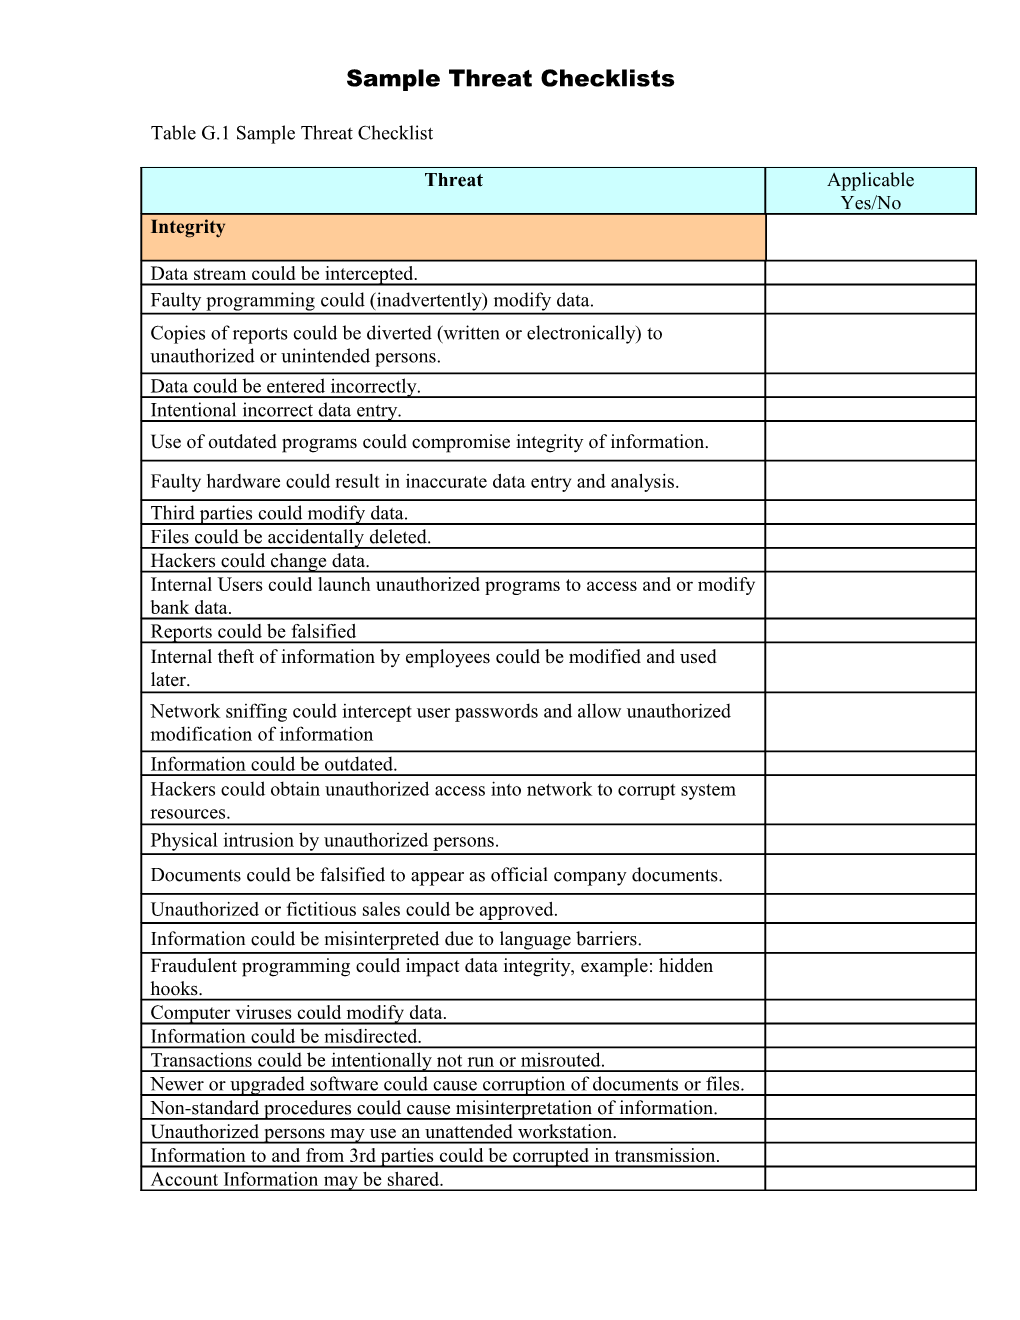 Table G.1 Sample Threat Checklist